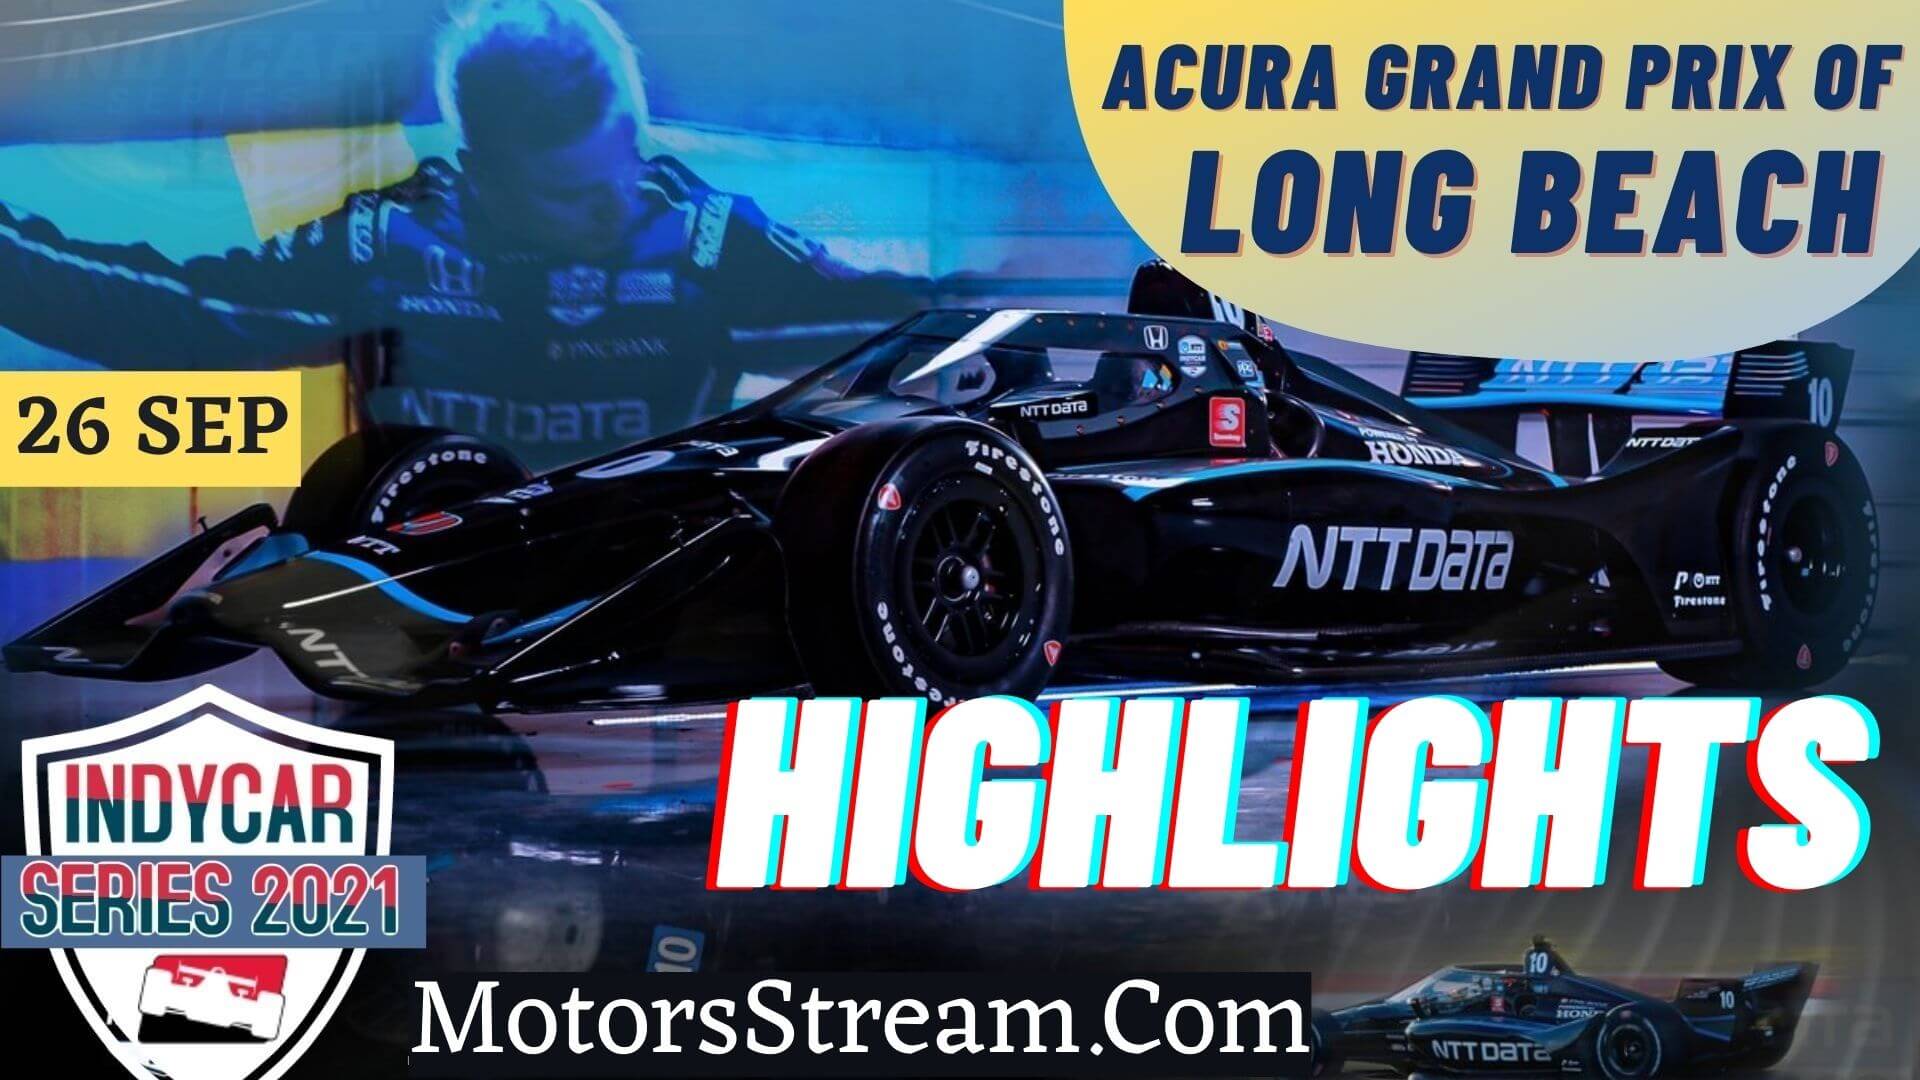 Acura Grand Prix Of Long Beach Highlights 2021 IndyCar